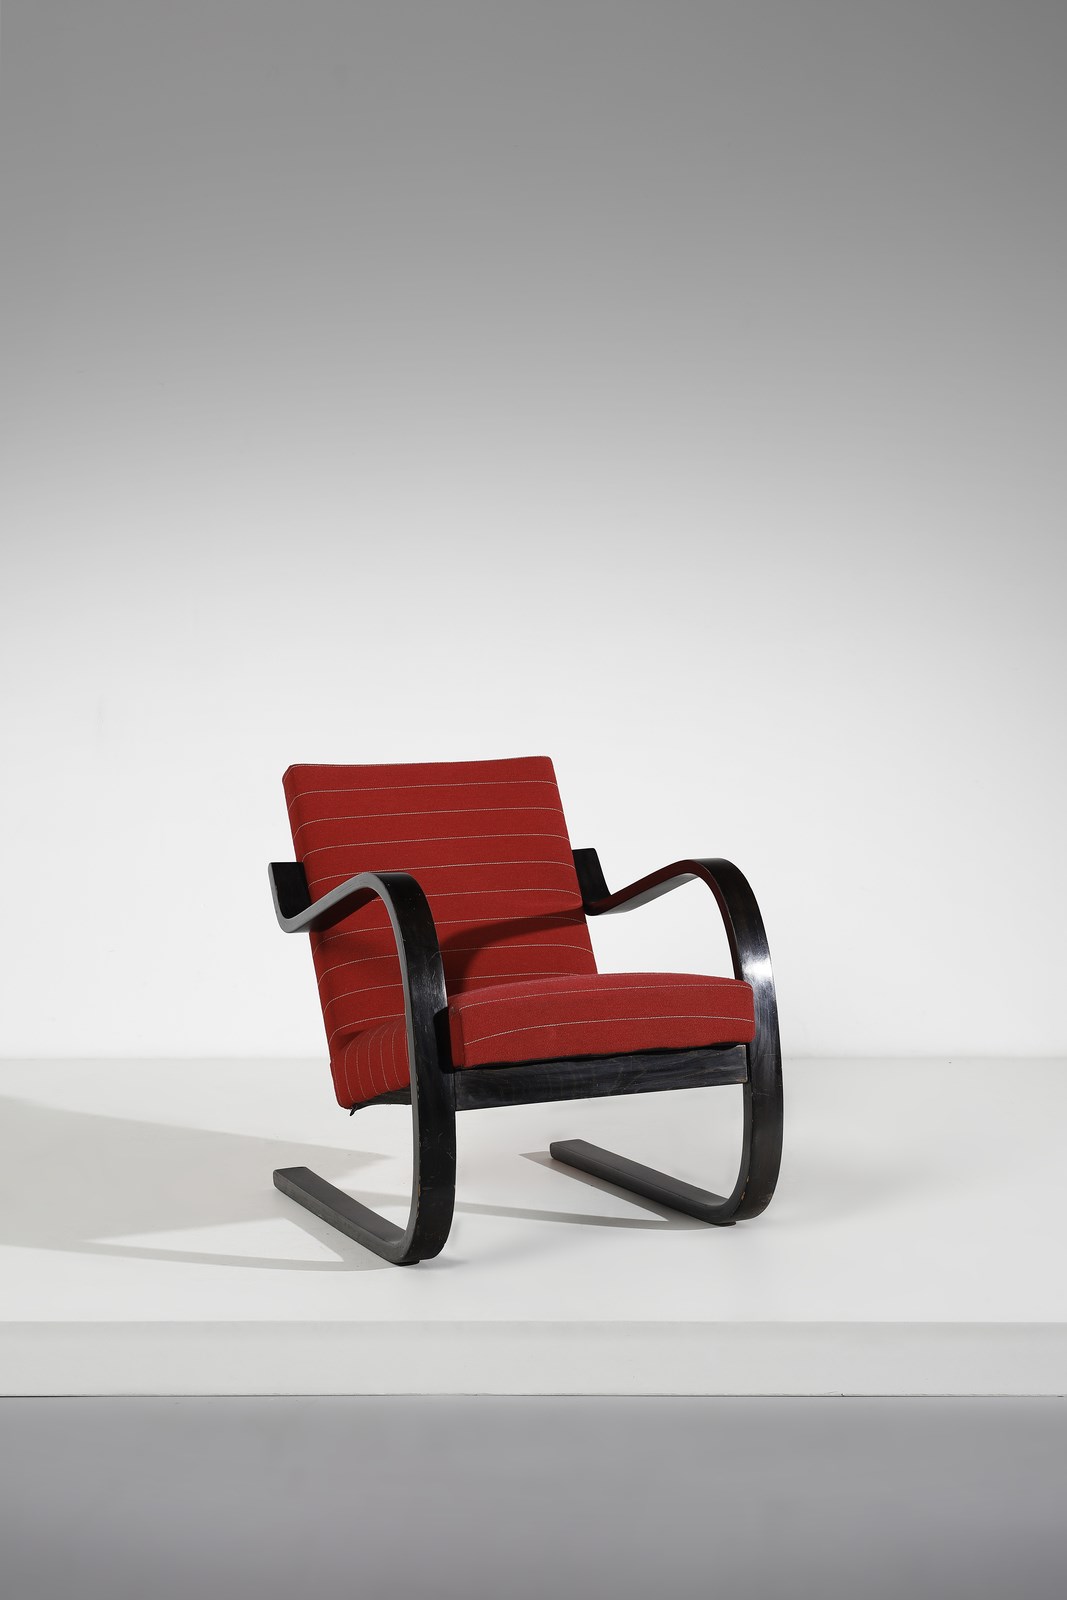 402 armchair for Artek (Alvar Aalto)